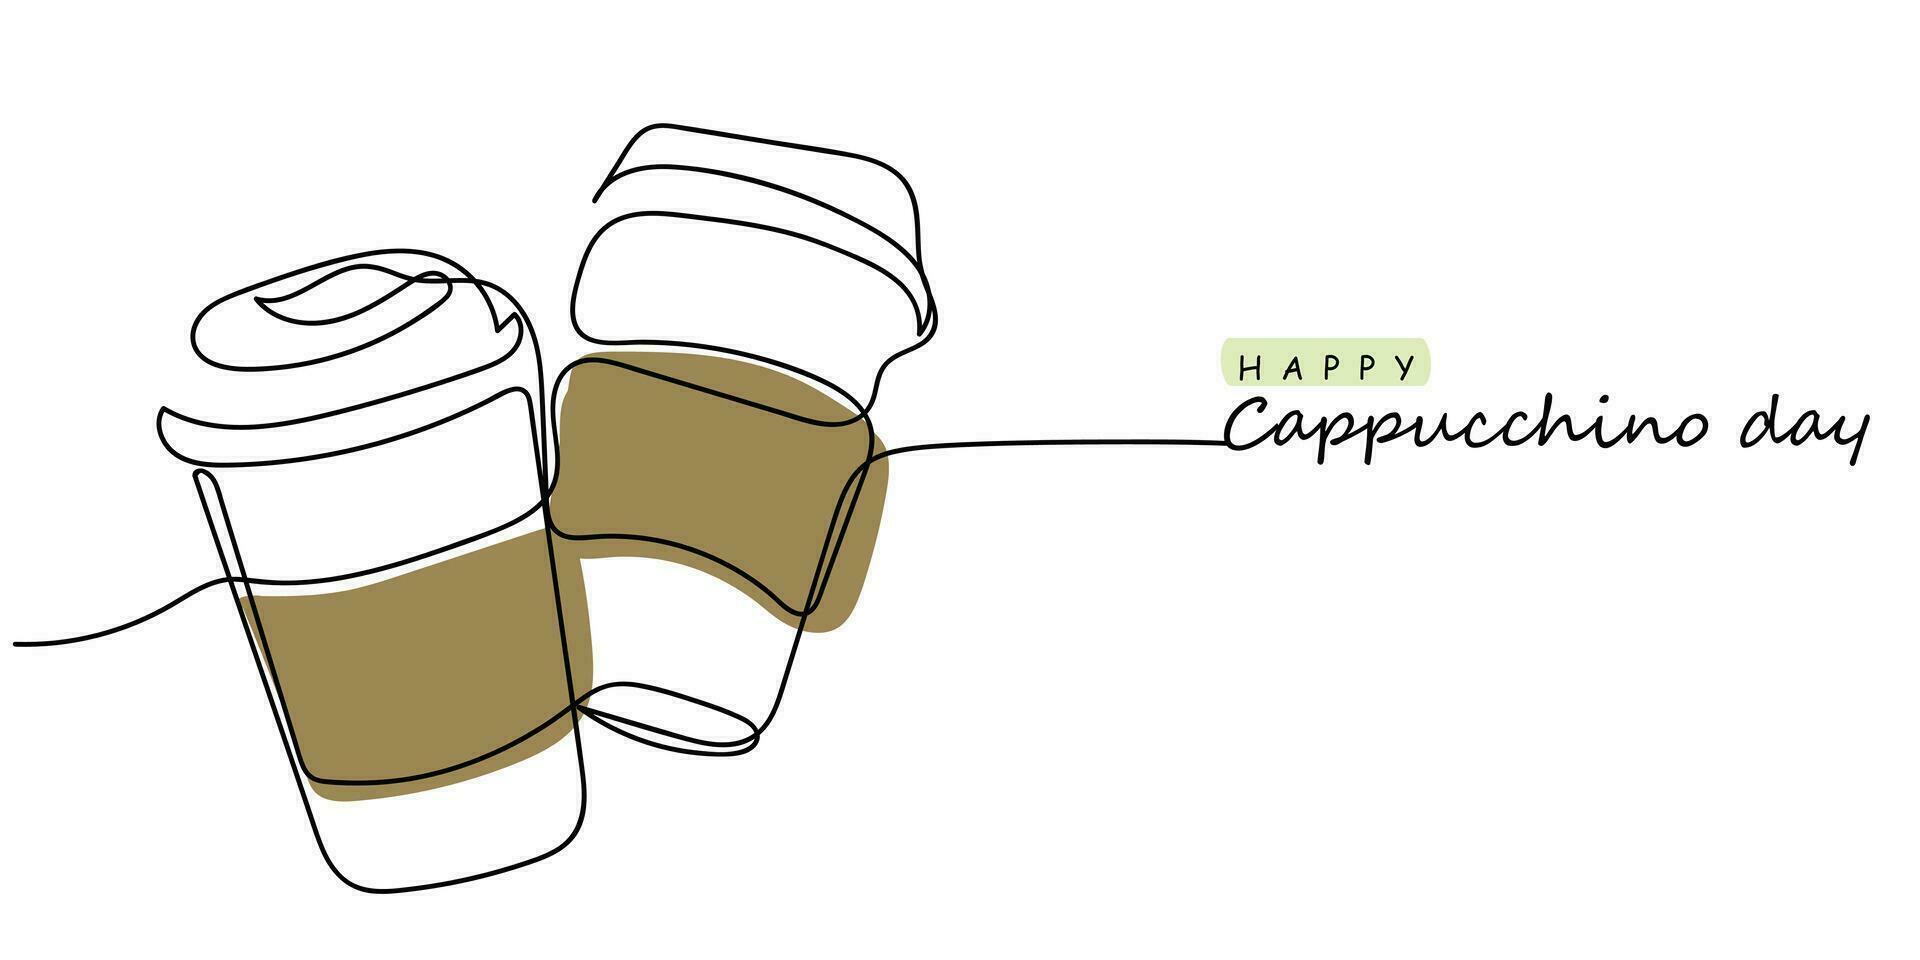 November cappuccino day celebration postcard line art vector